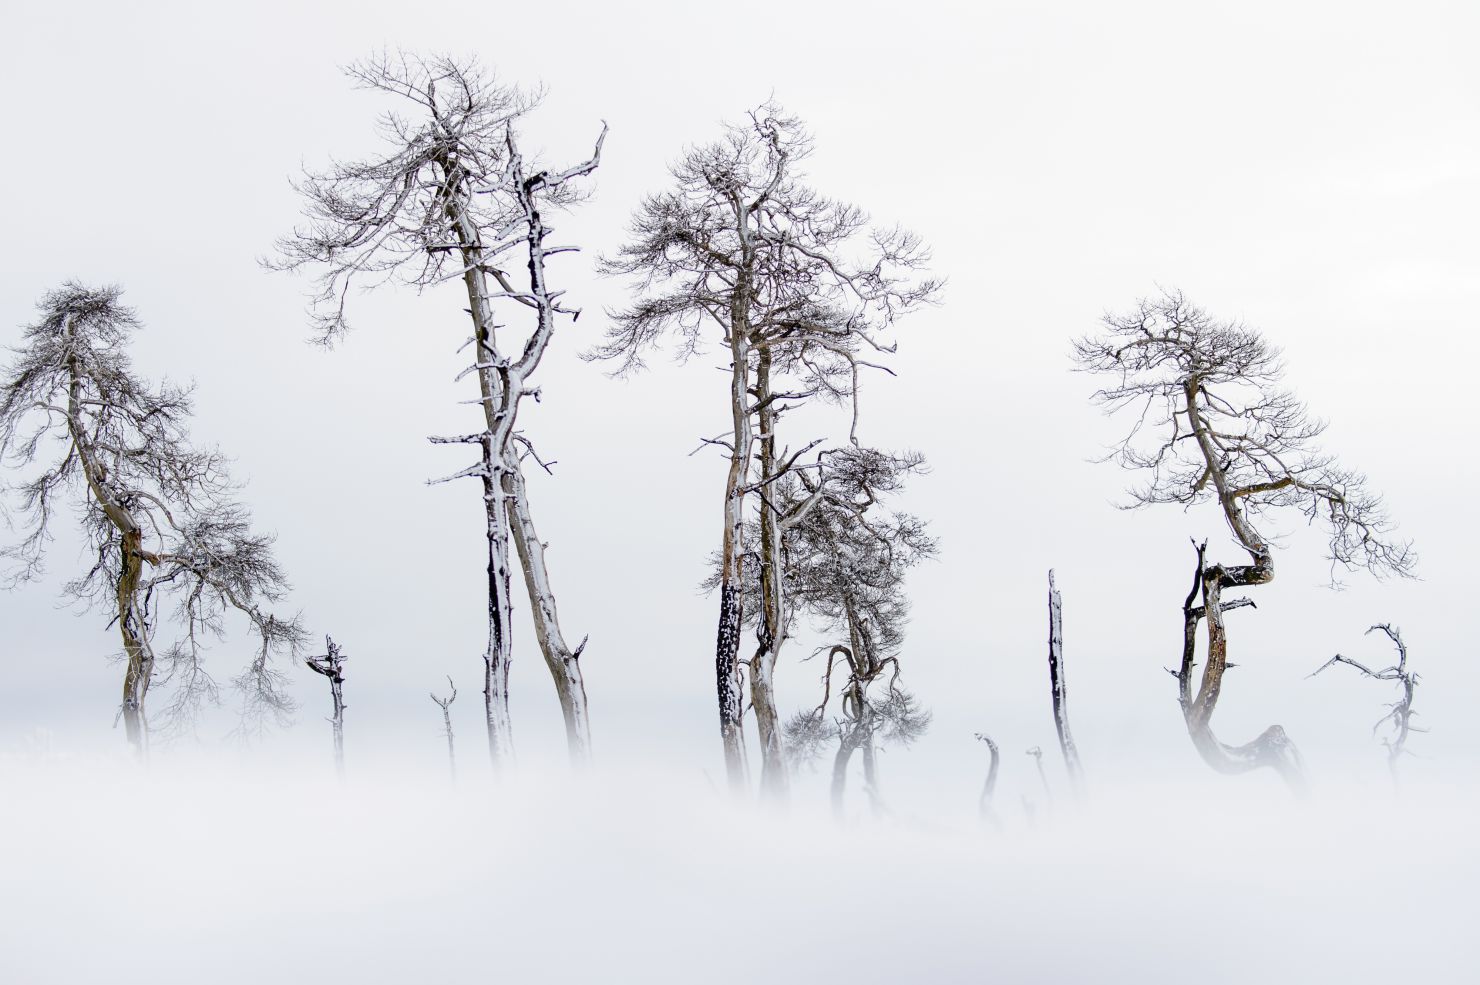 Dead pines in snow landscape